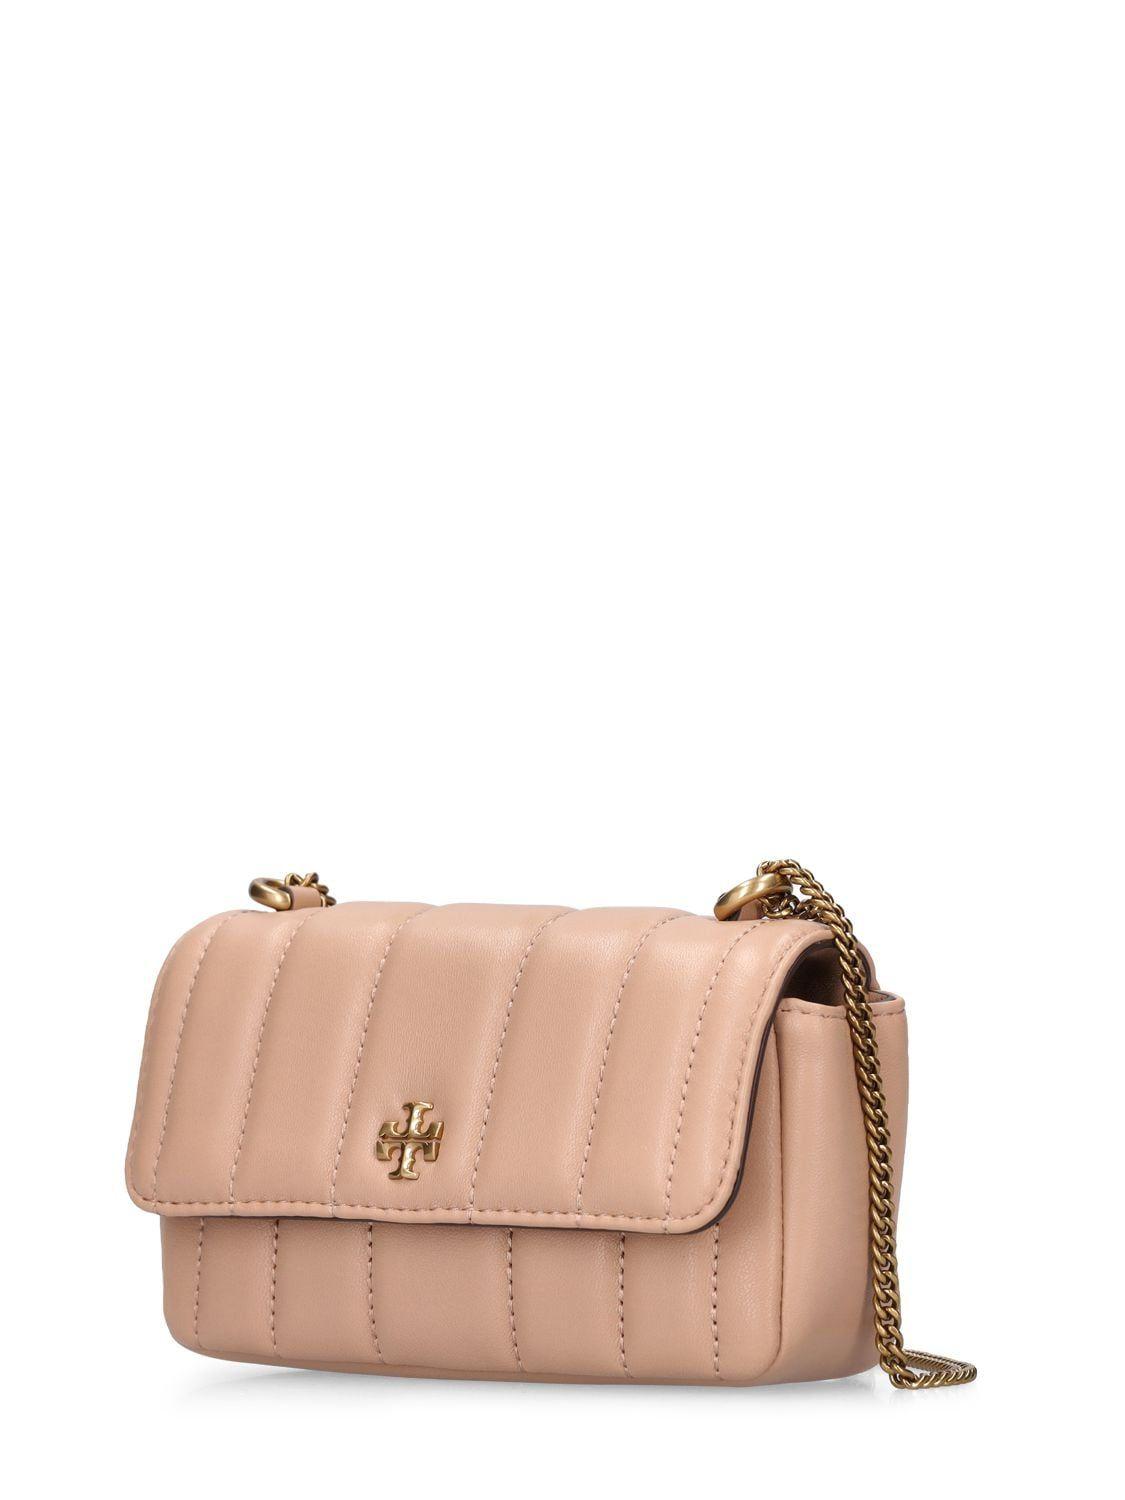 Tory Burch Mini Kira Leather Flap Bag in Pink | Lyst